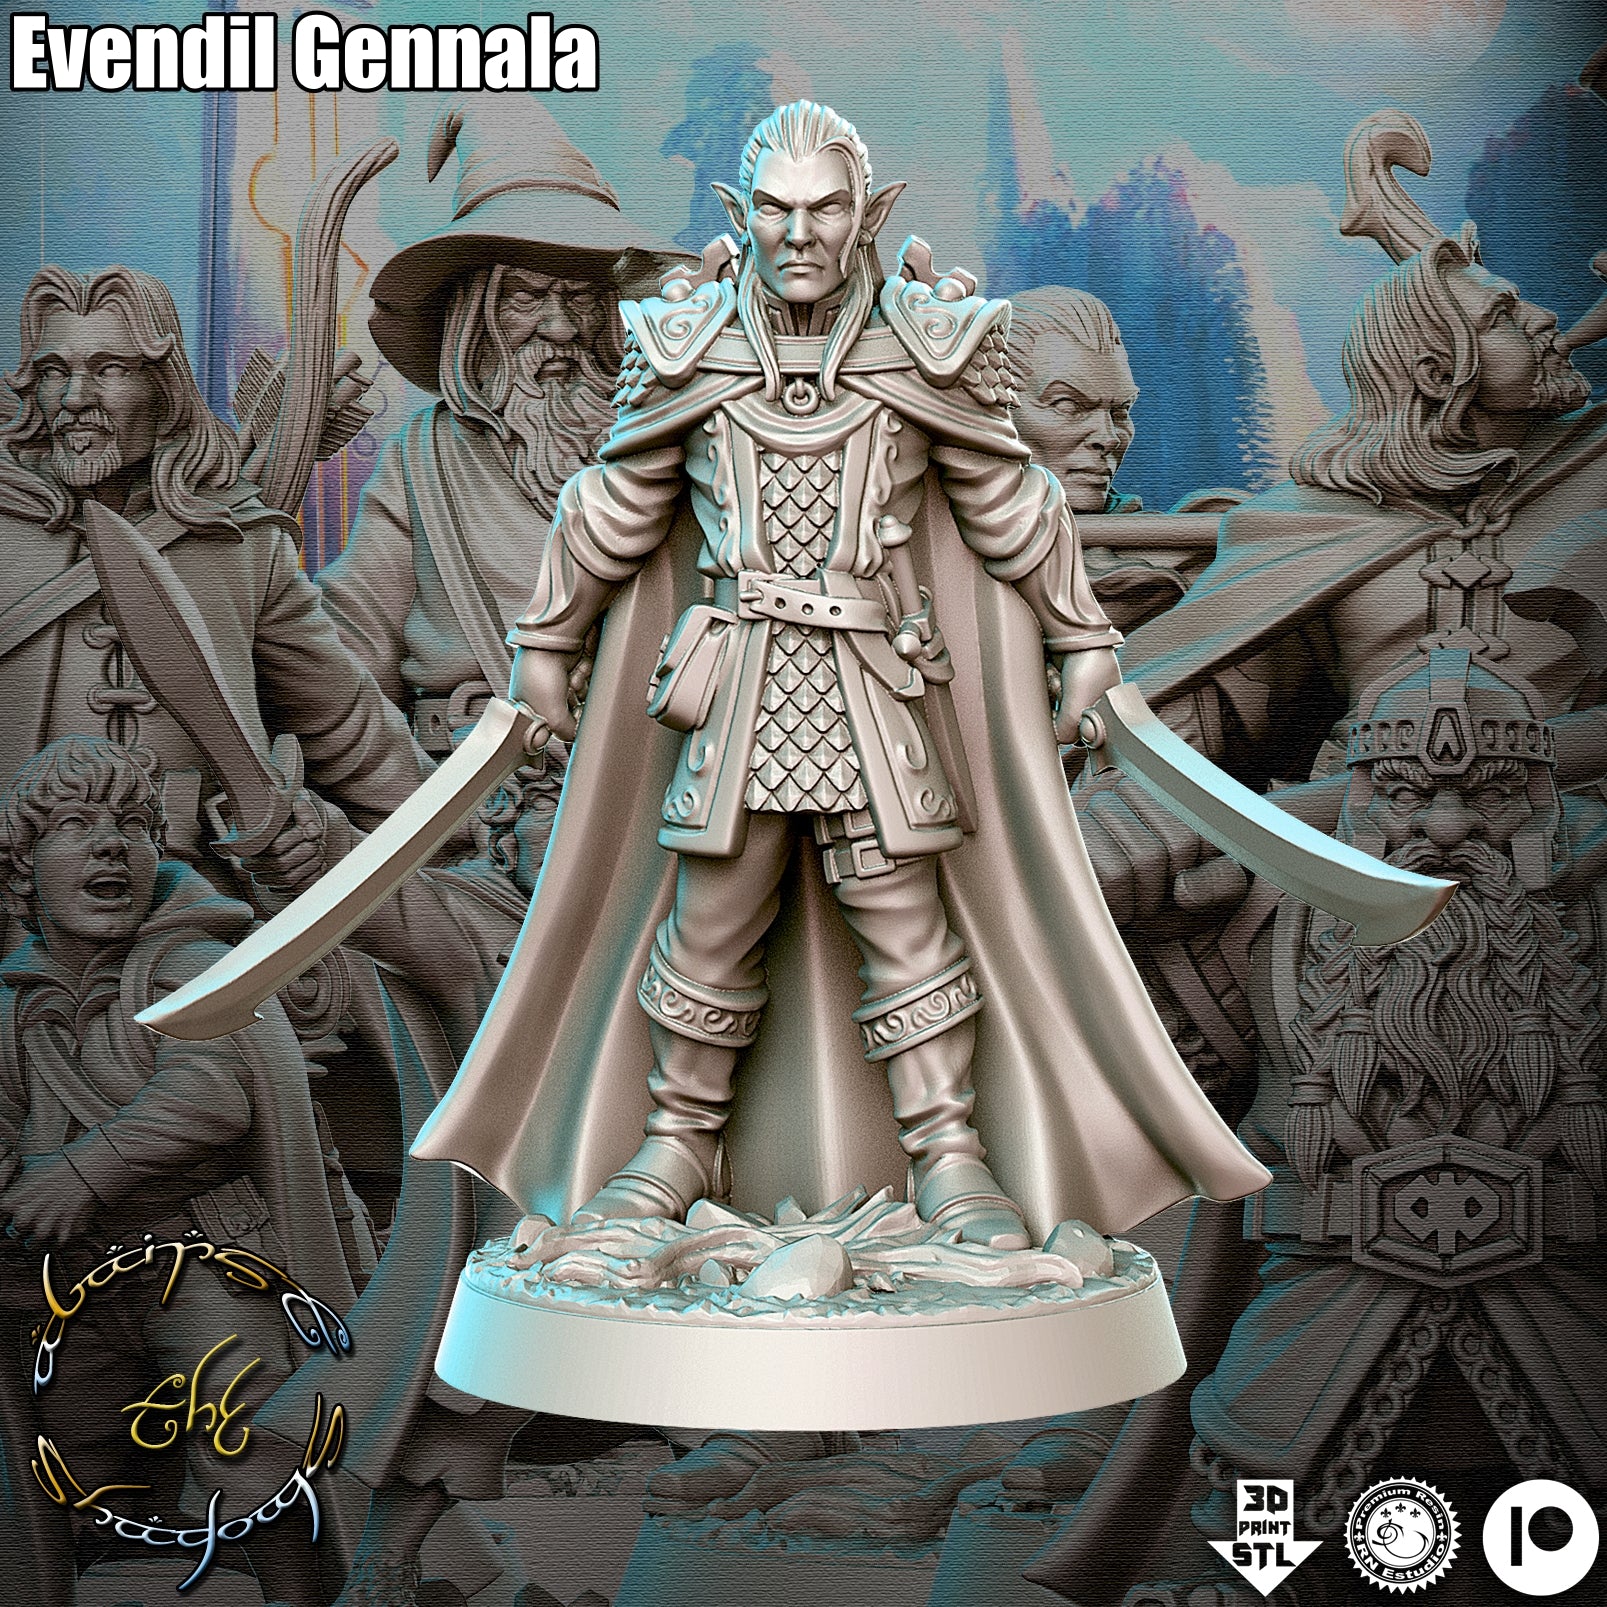 Evendil Gennala - Against the Shadows - Green Wildling Miniatures